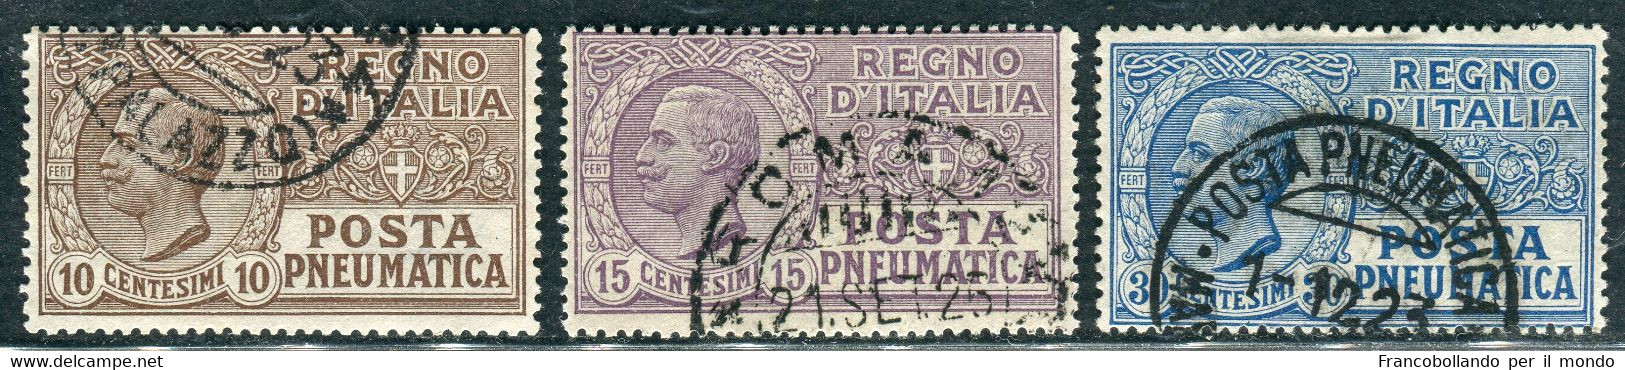 1913/23 Regno D'Italia Posta Pneumatica Set Usato N° S1900 - Pneumatische Post